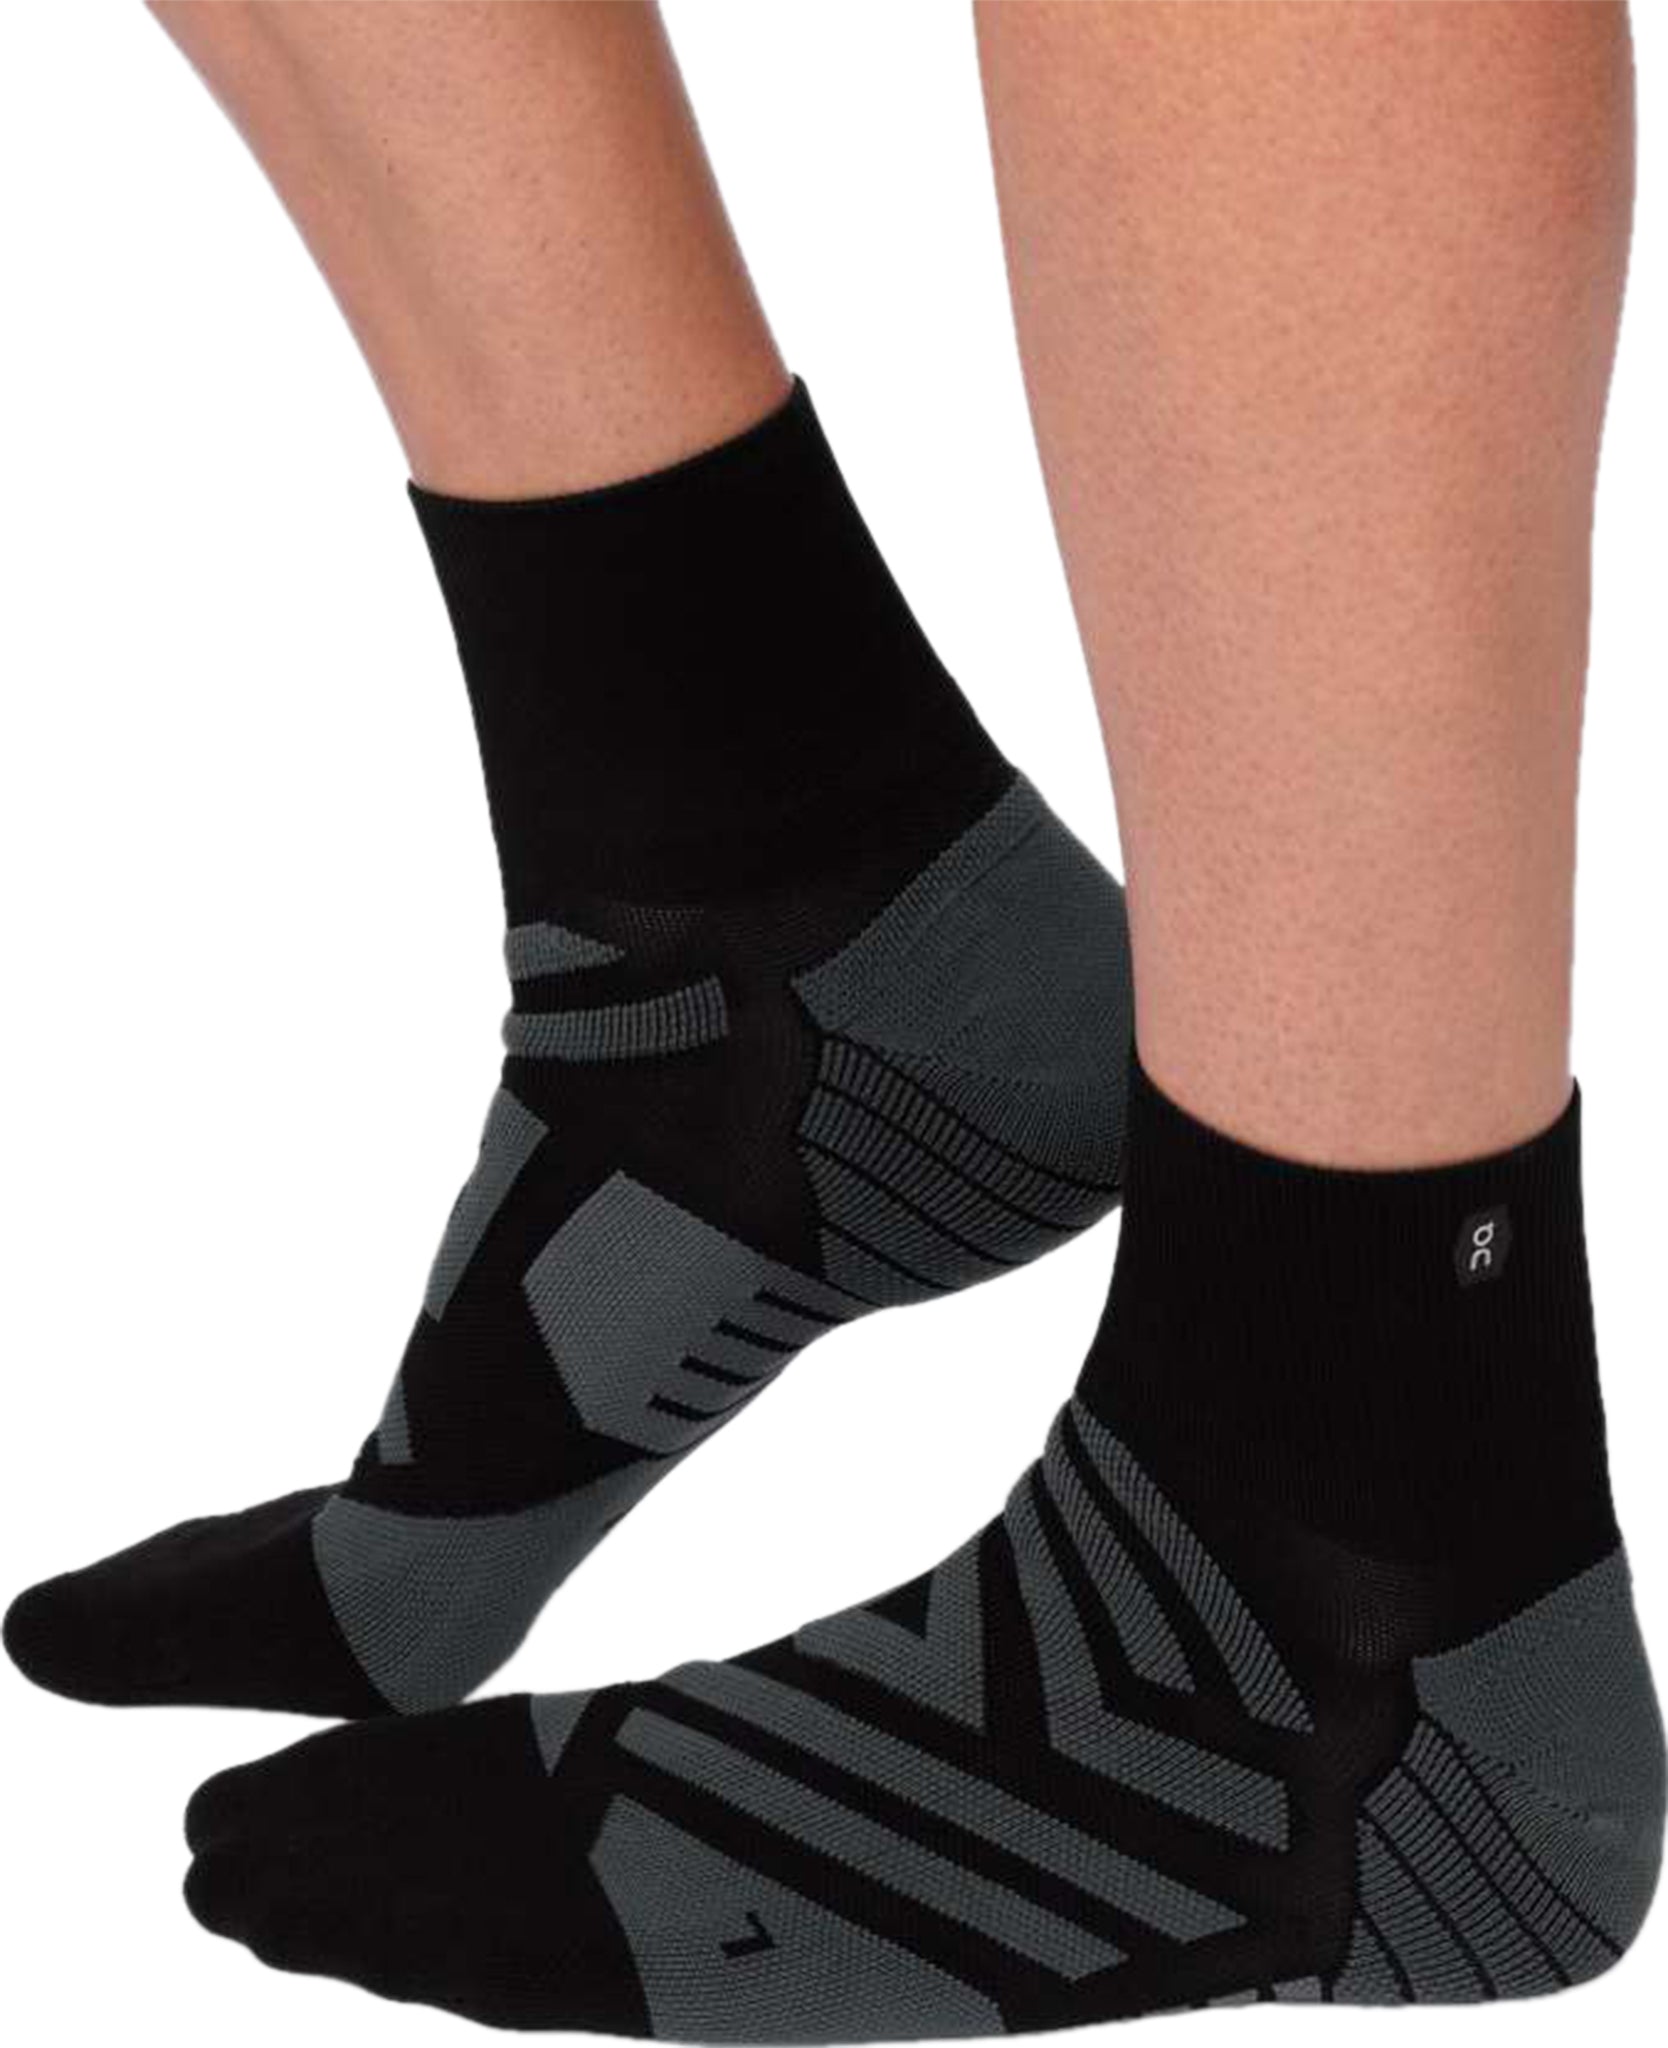 8 Socks to Keep Your Feet Cozy This Winter - V Magazine